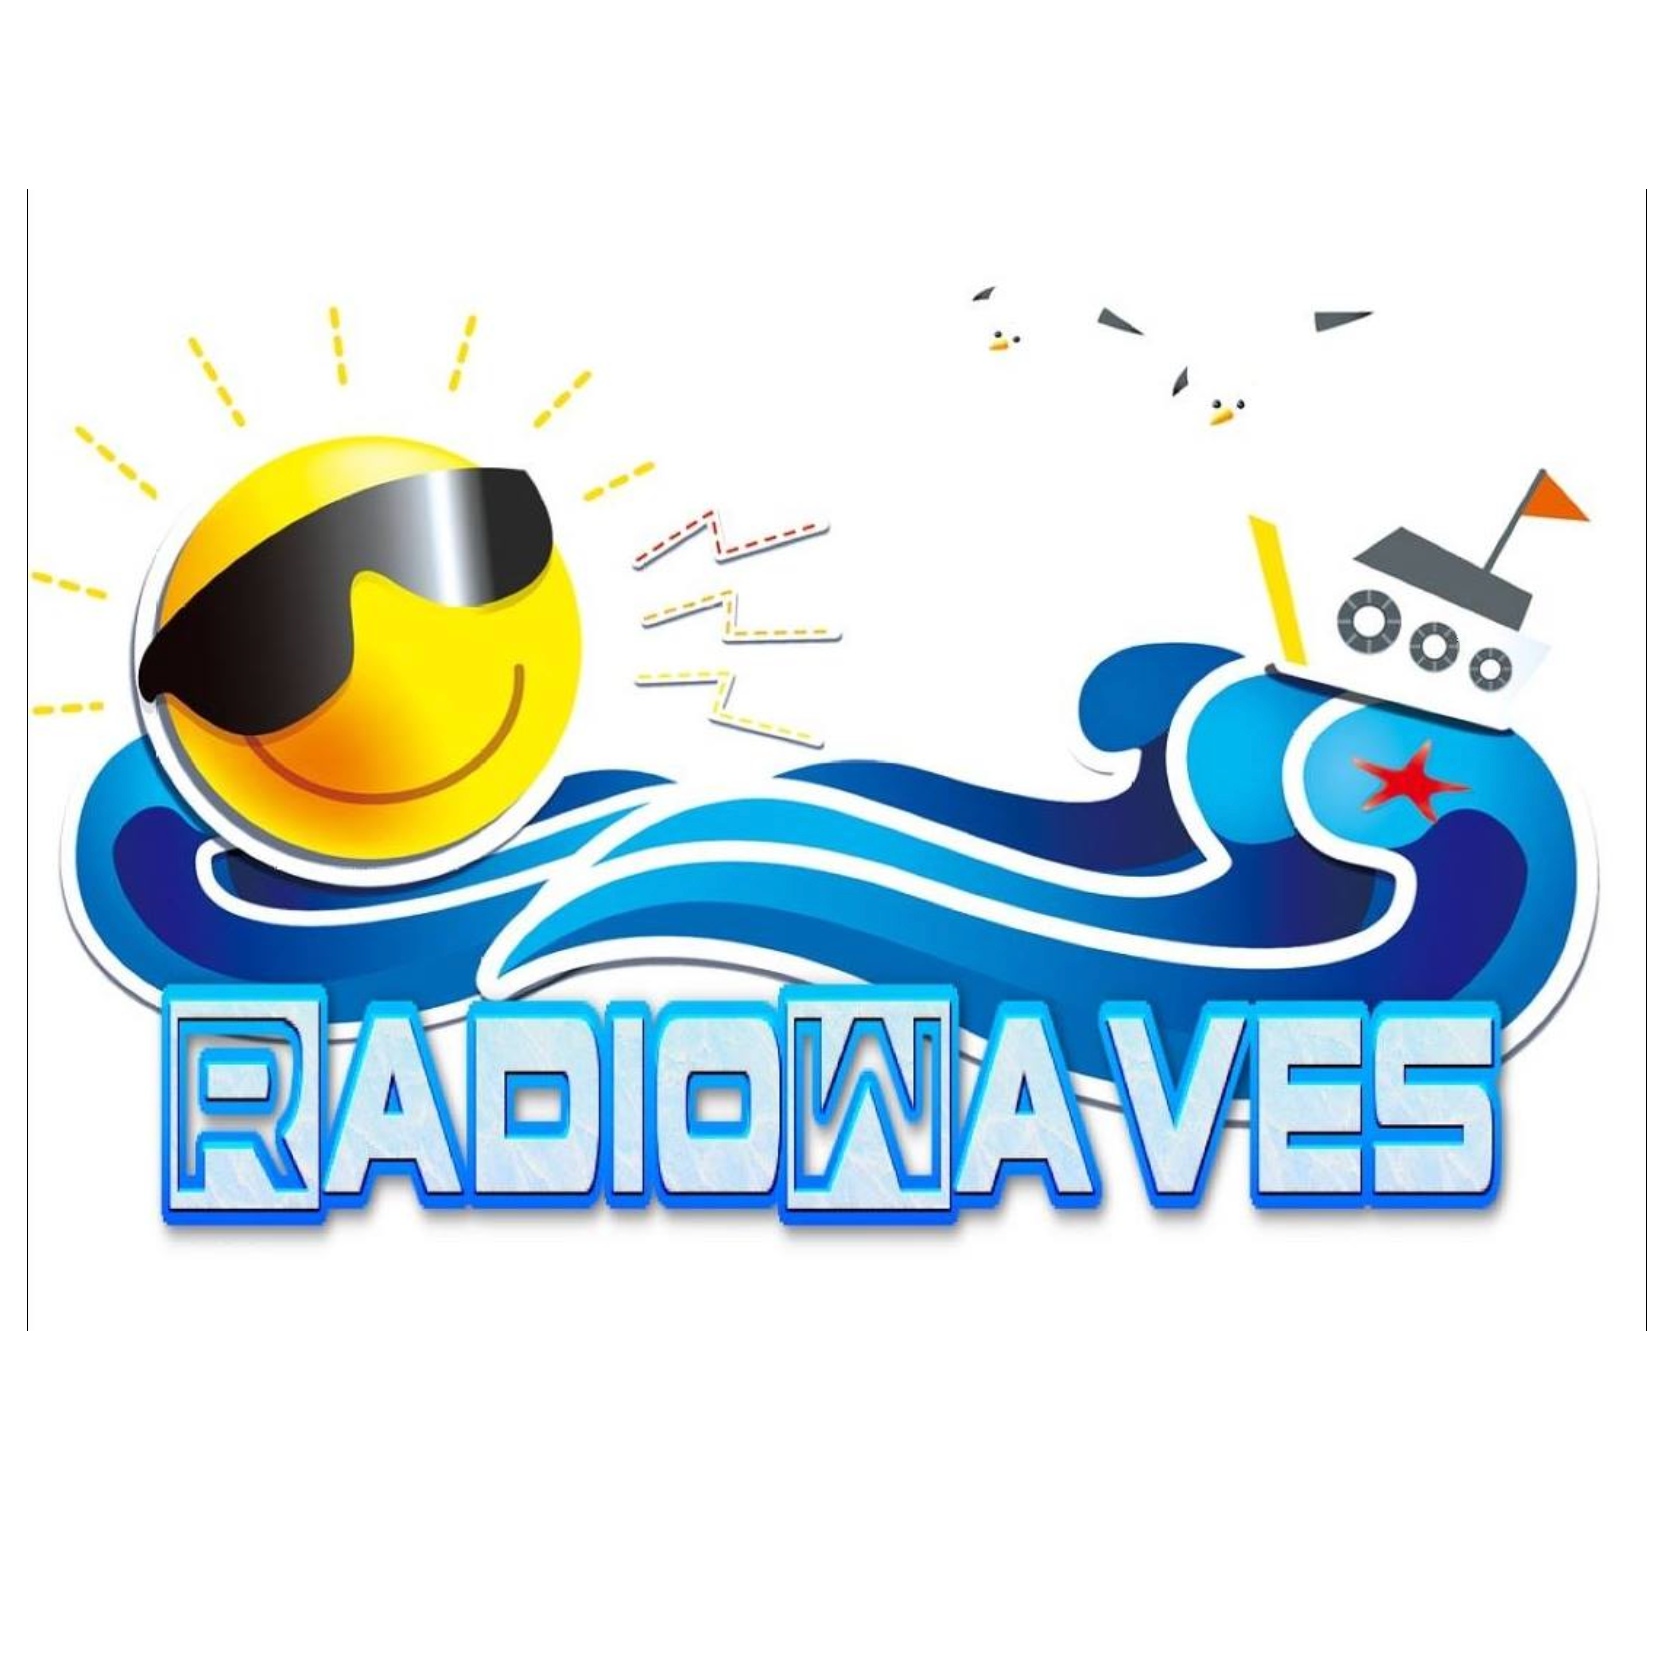 Radiowaves Can